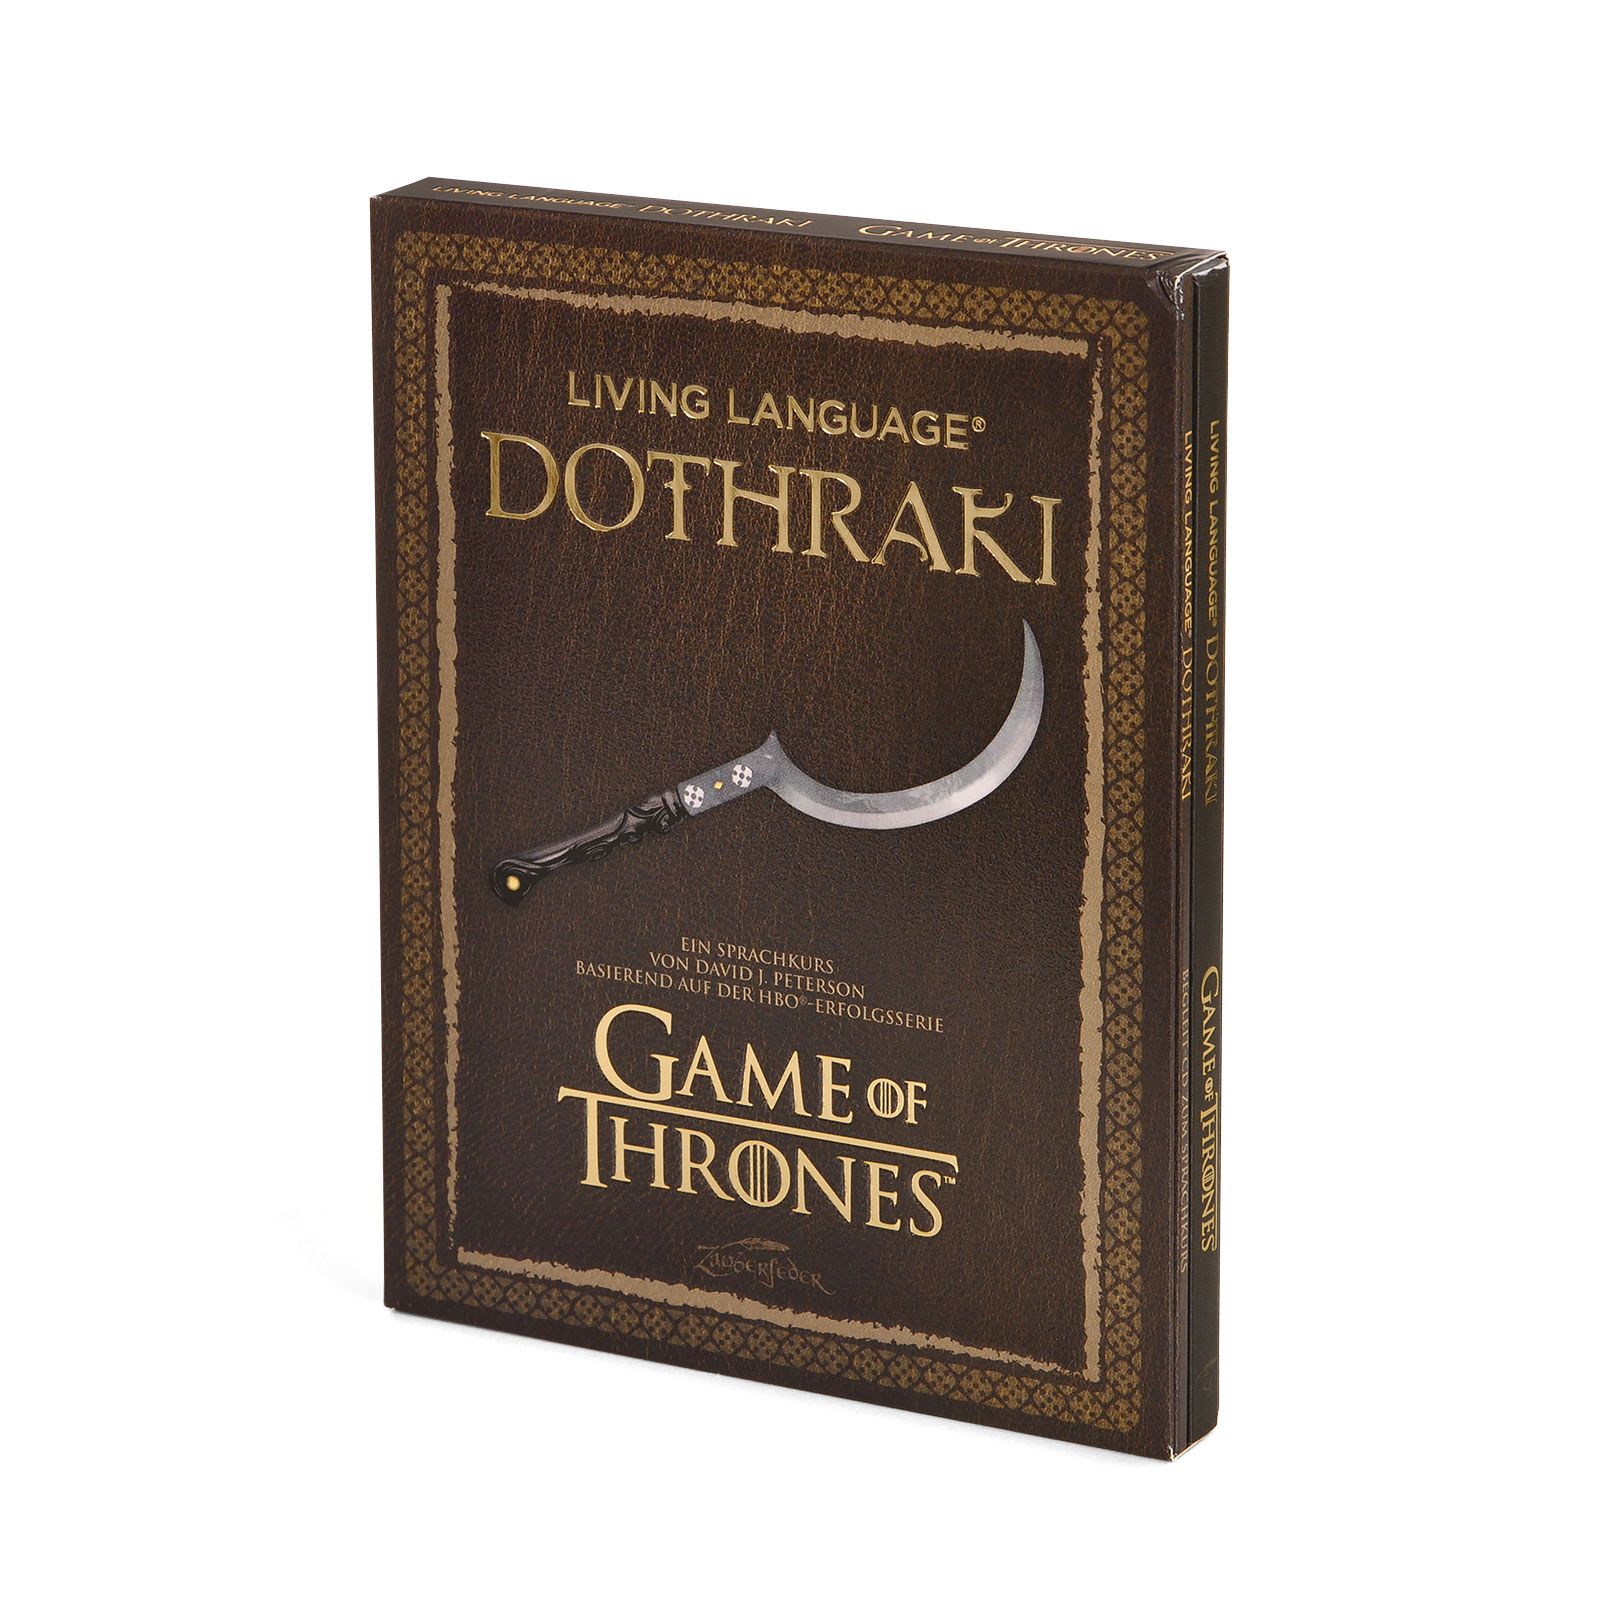 Game of Thrones - Dothraki - A Language Course